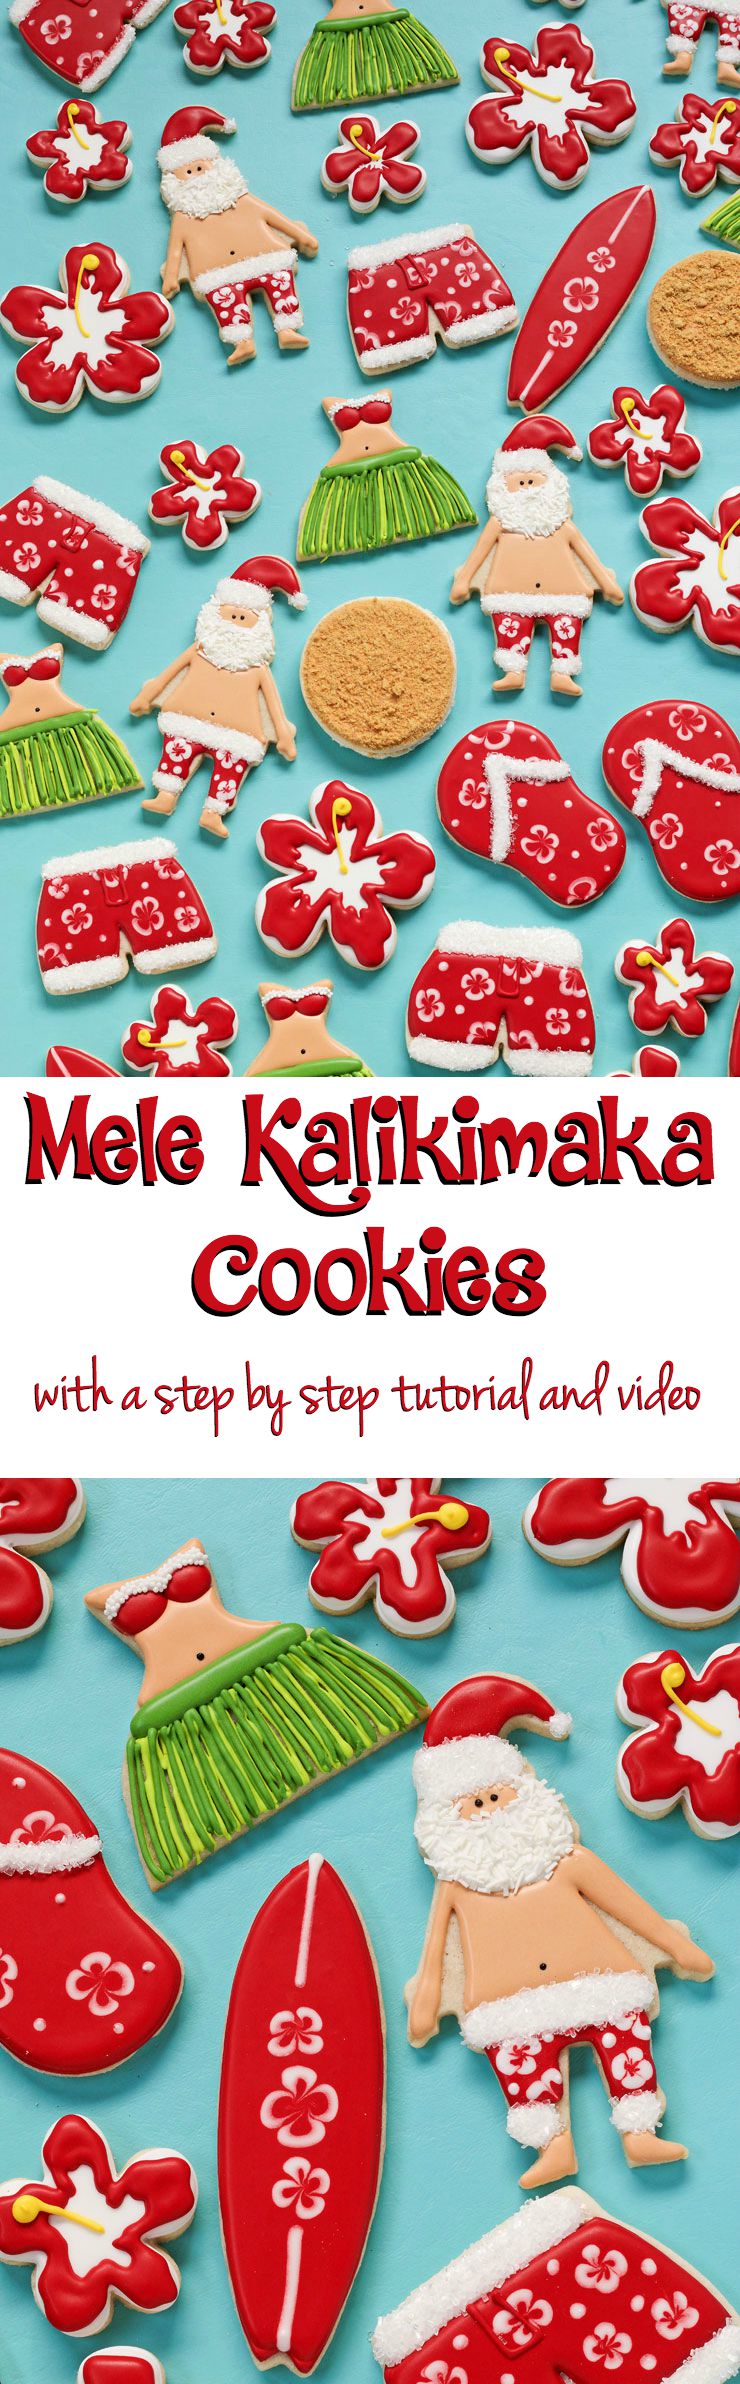 Mele Kalikimaka Cookies are Easy to Make when You Follow this Tutorial via www.thebearfootbaker.com